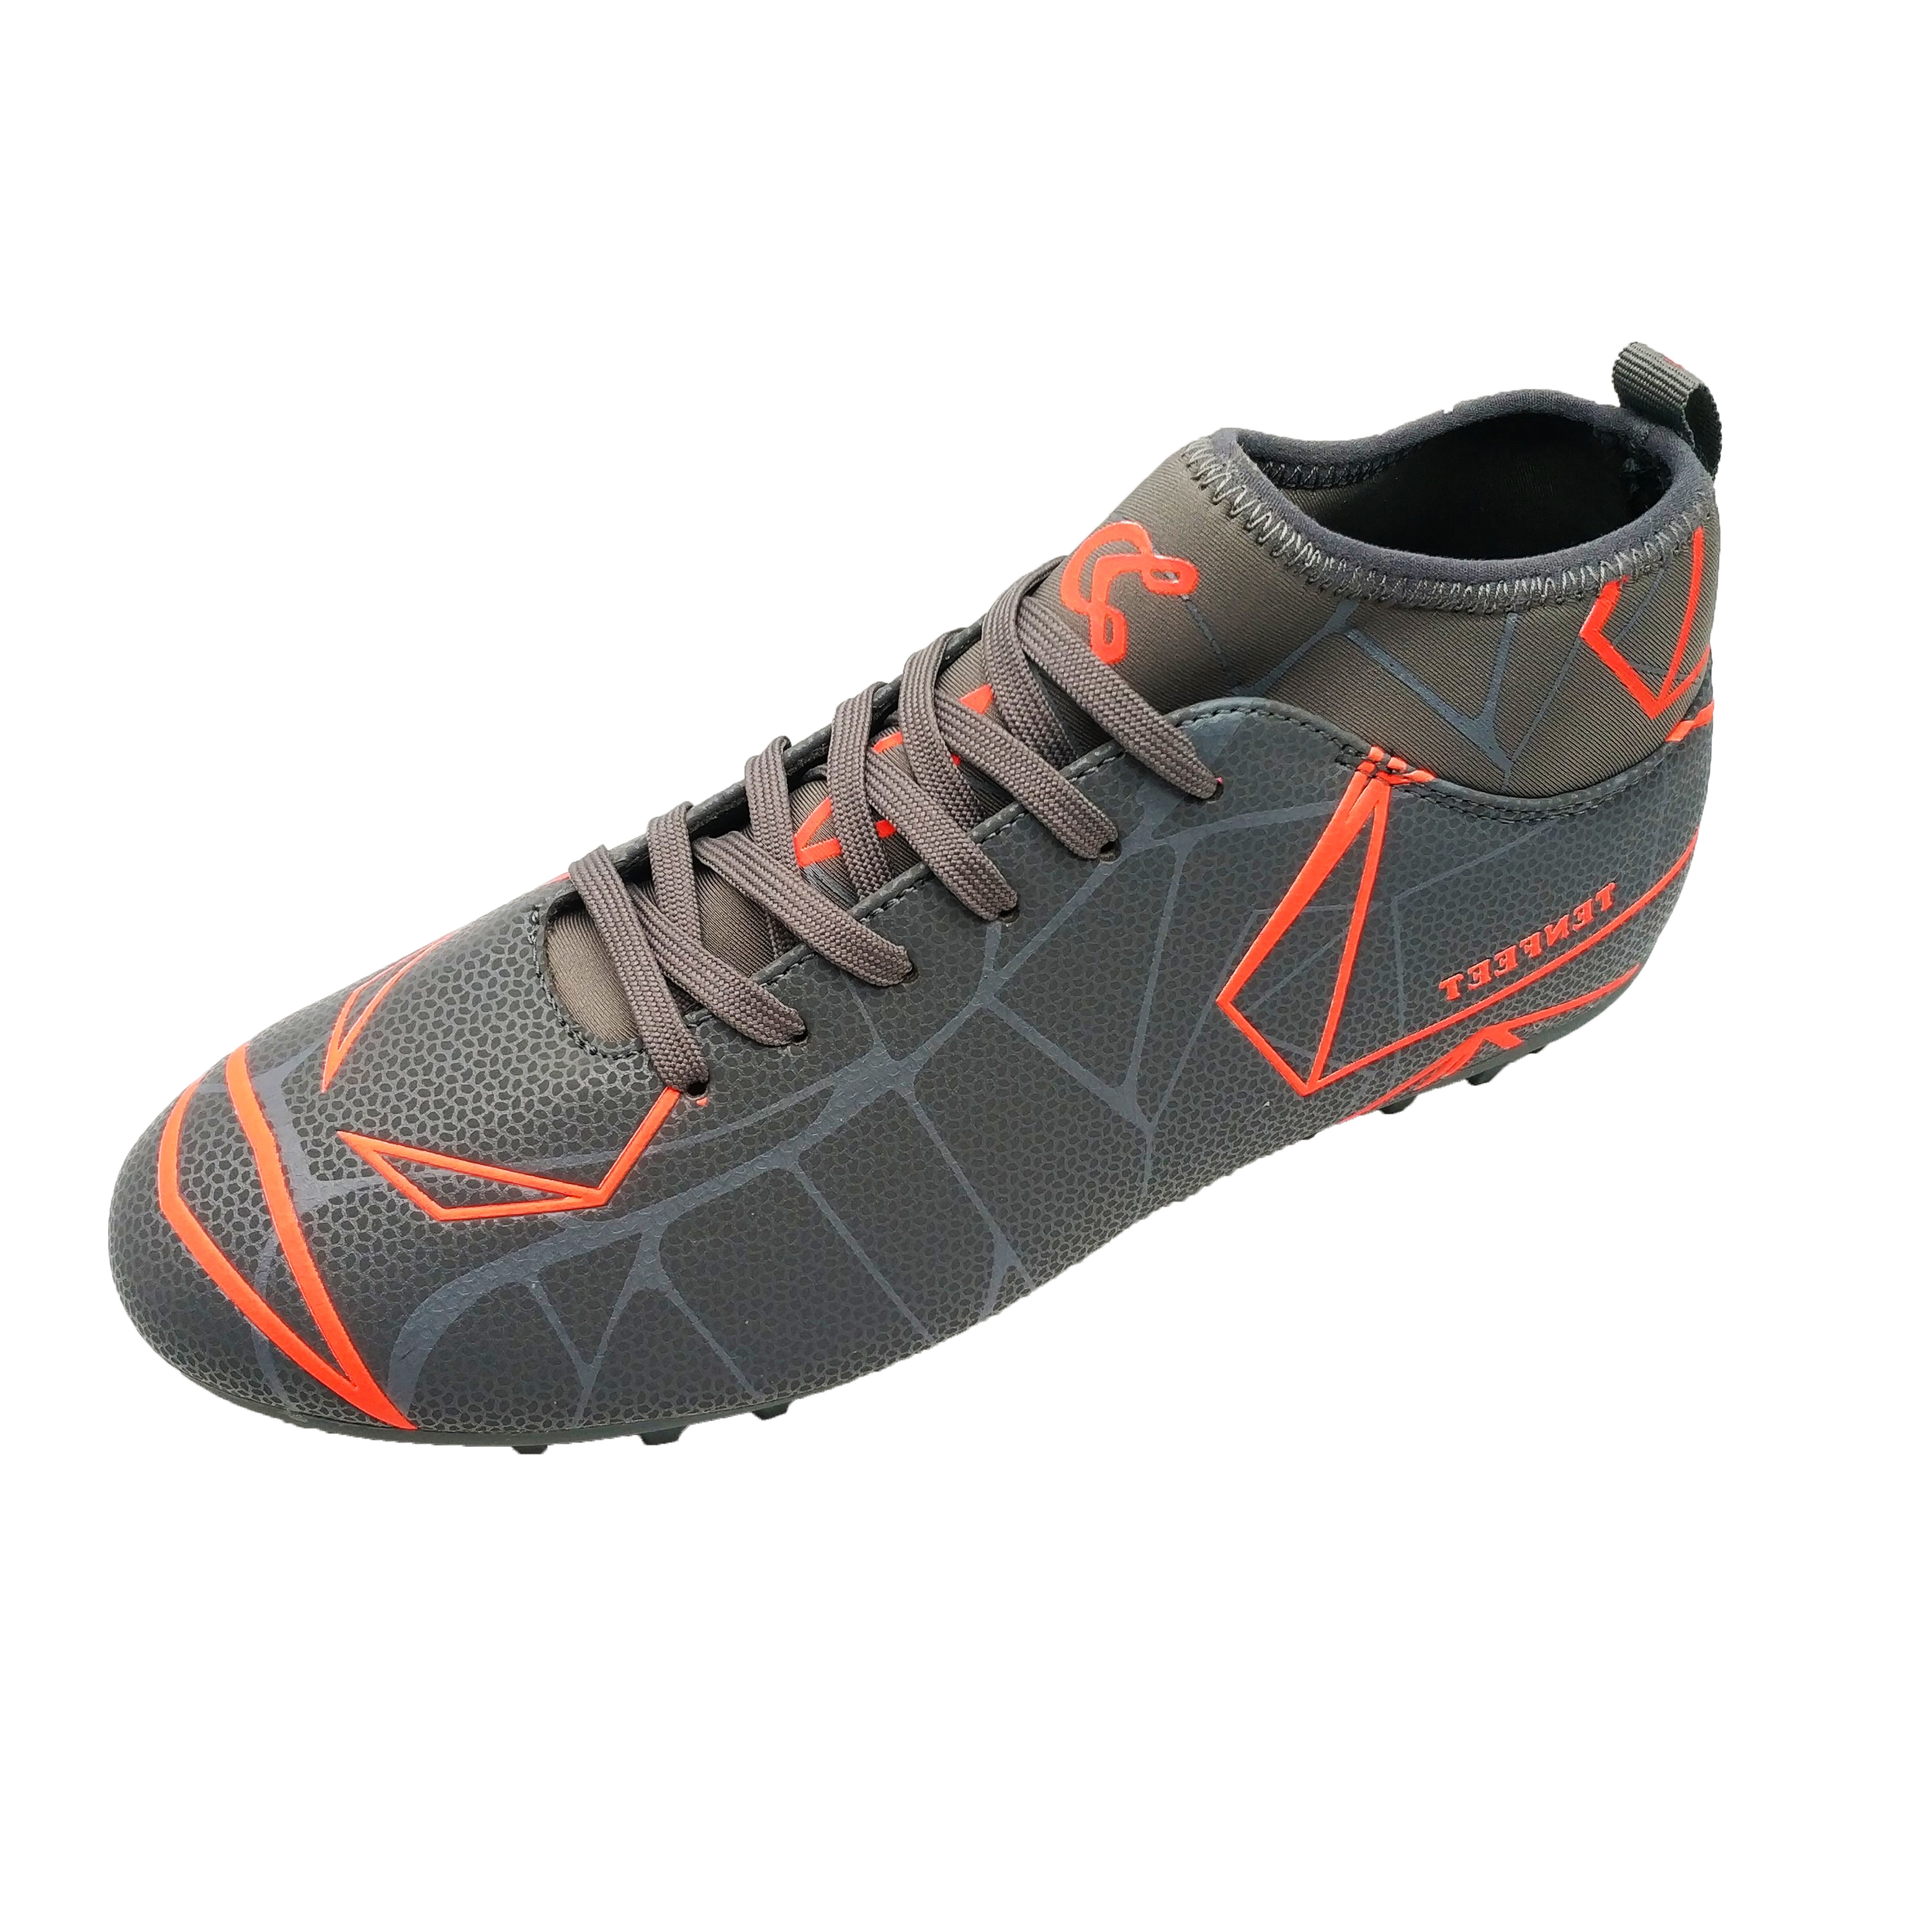 Oem Design Men Chuteira Futebol Boots Cleats Training Soccer Shoes Wholesale